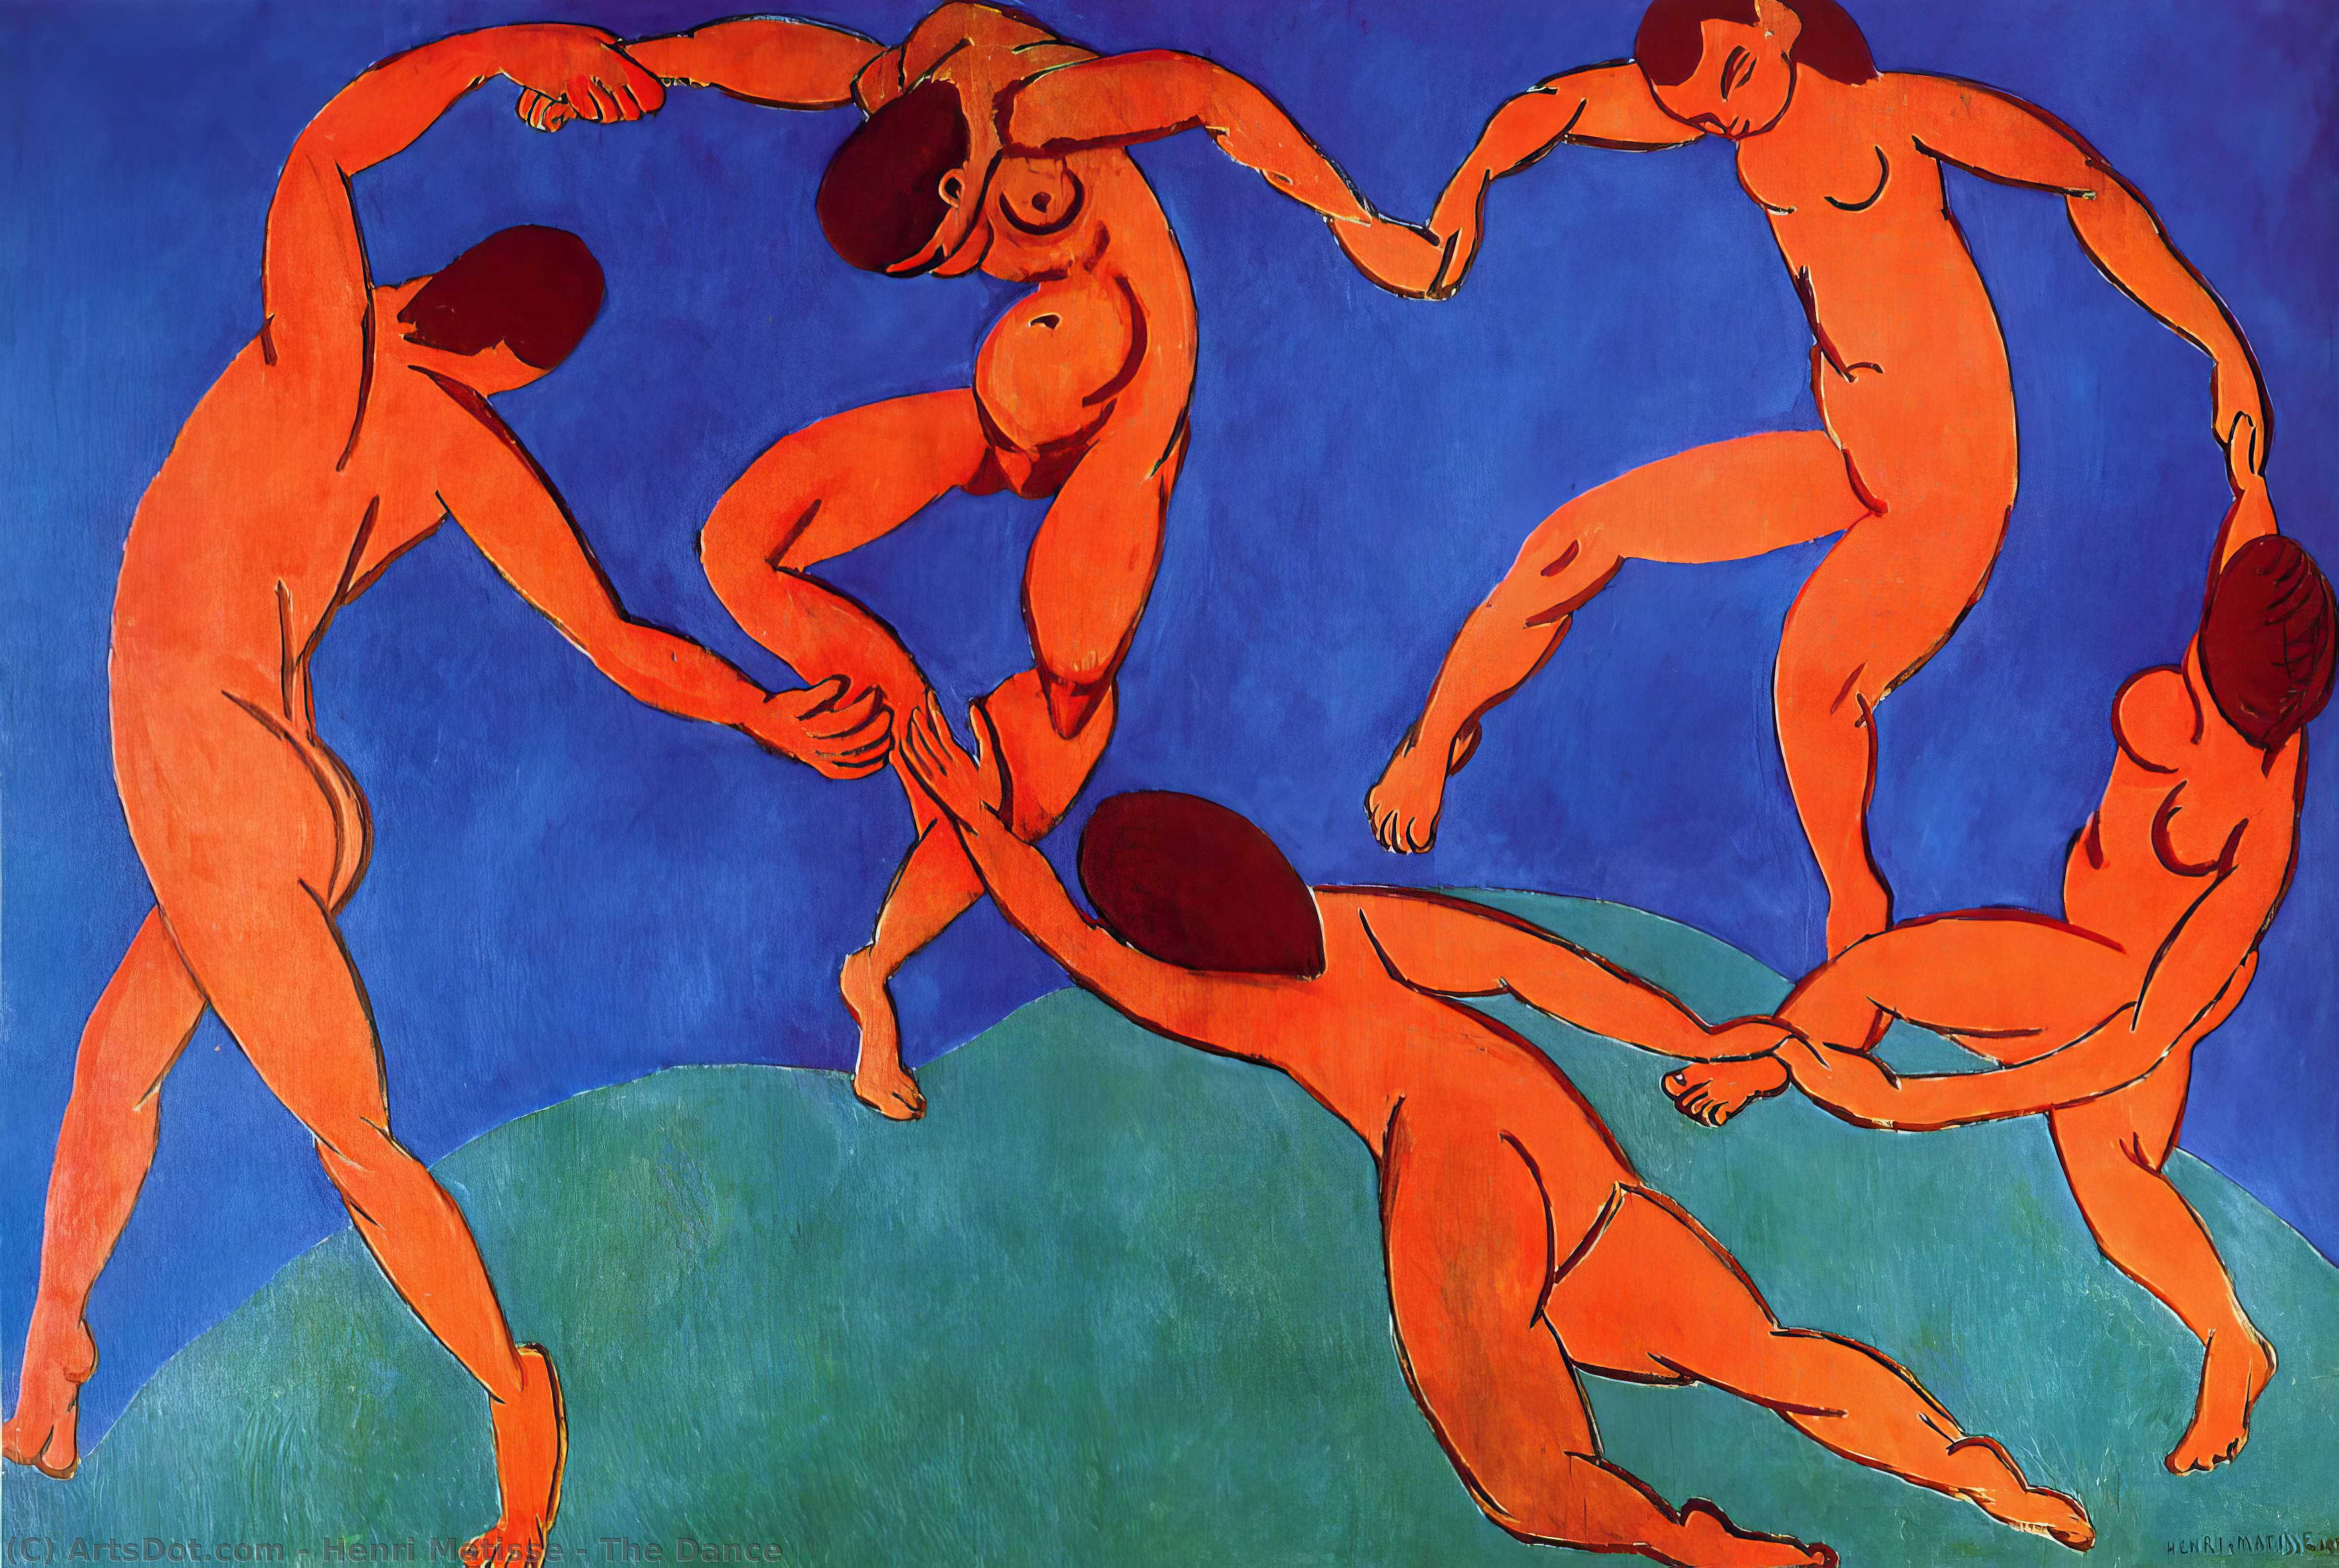  Artwork Replica The Dance, 1909 by Henri Matisse (Inspired By) (1869-1954, France) | ArtsDot.com